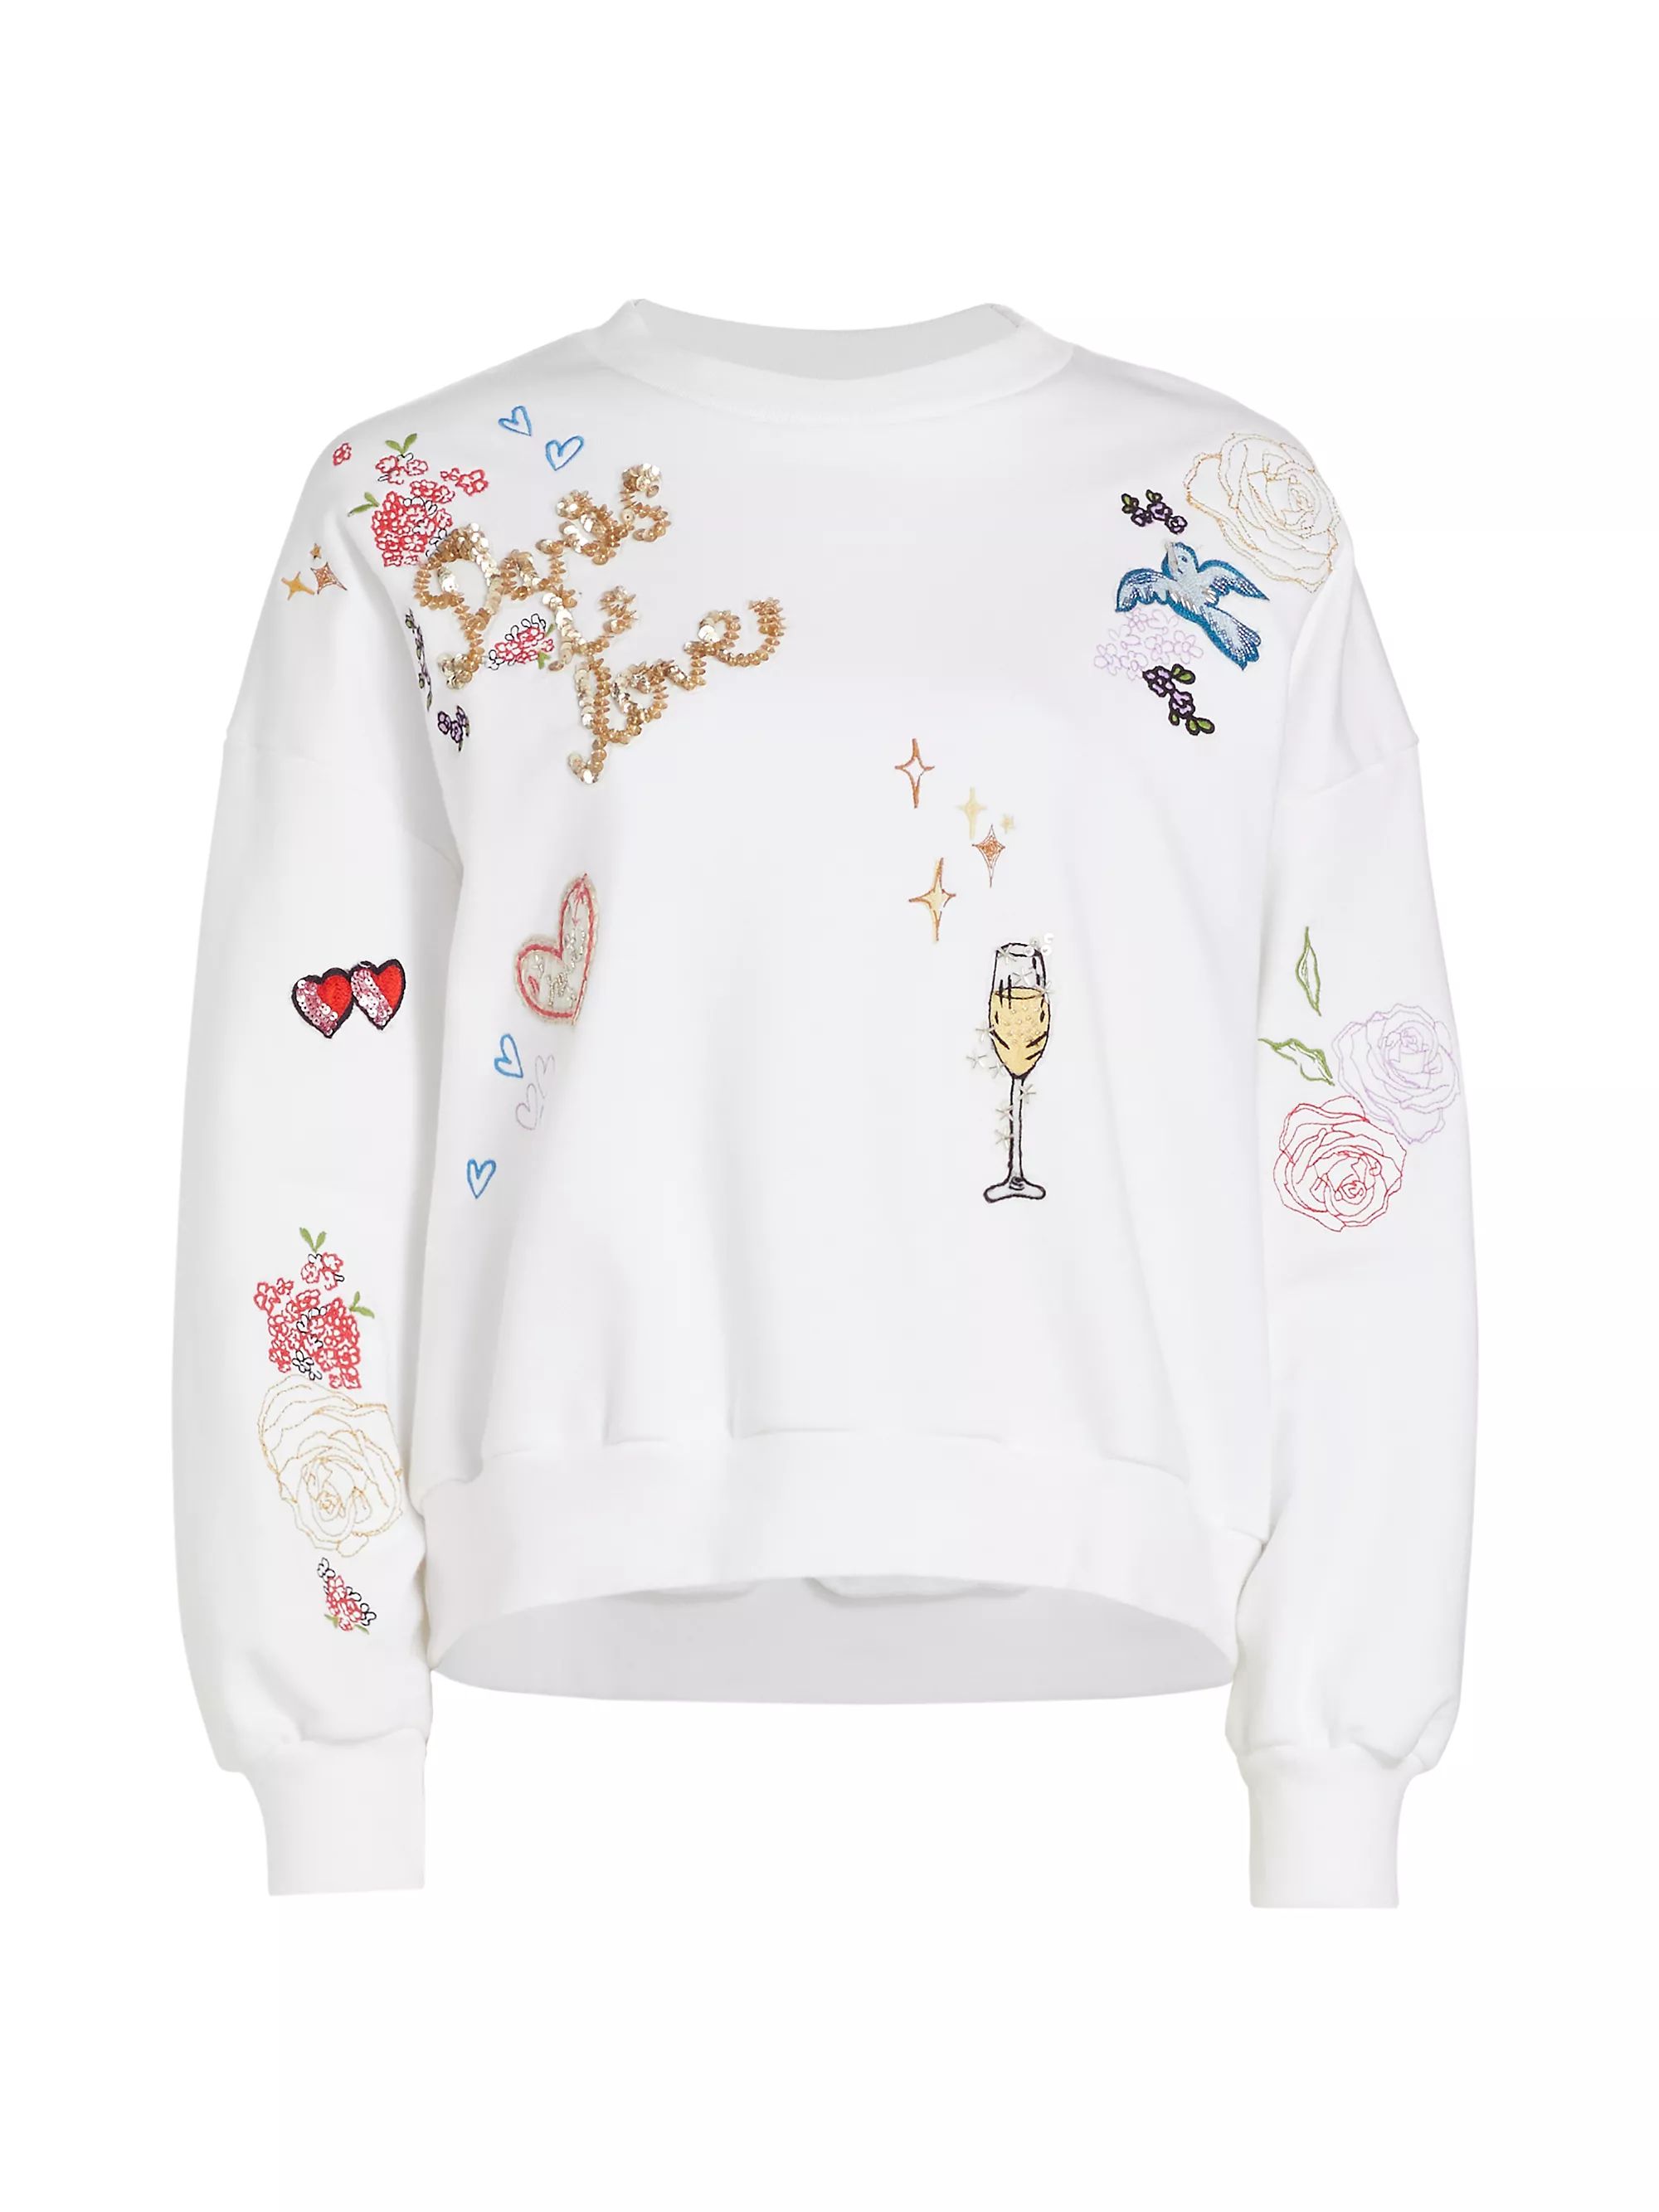 Brandy Daydream Doodles Sweatshirt | Saks Fifth Avenue